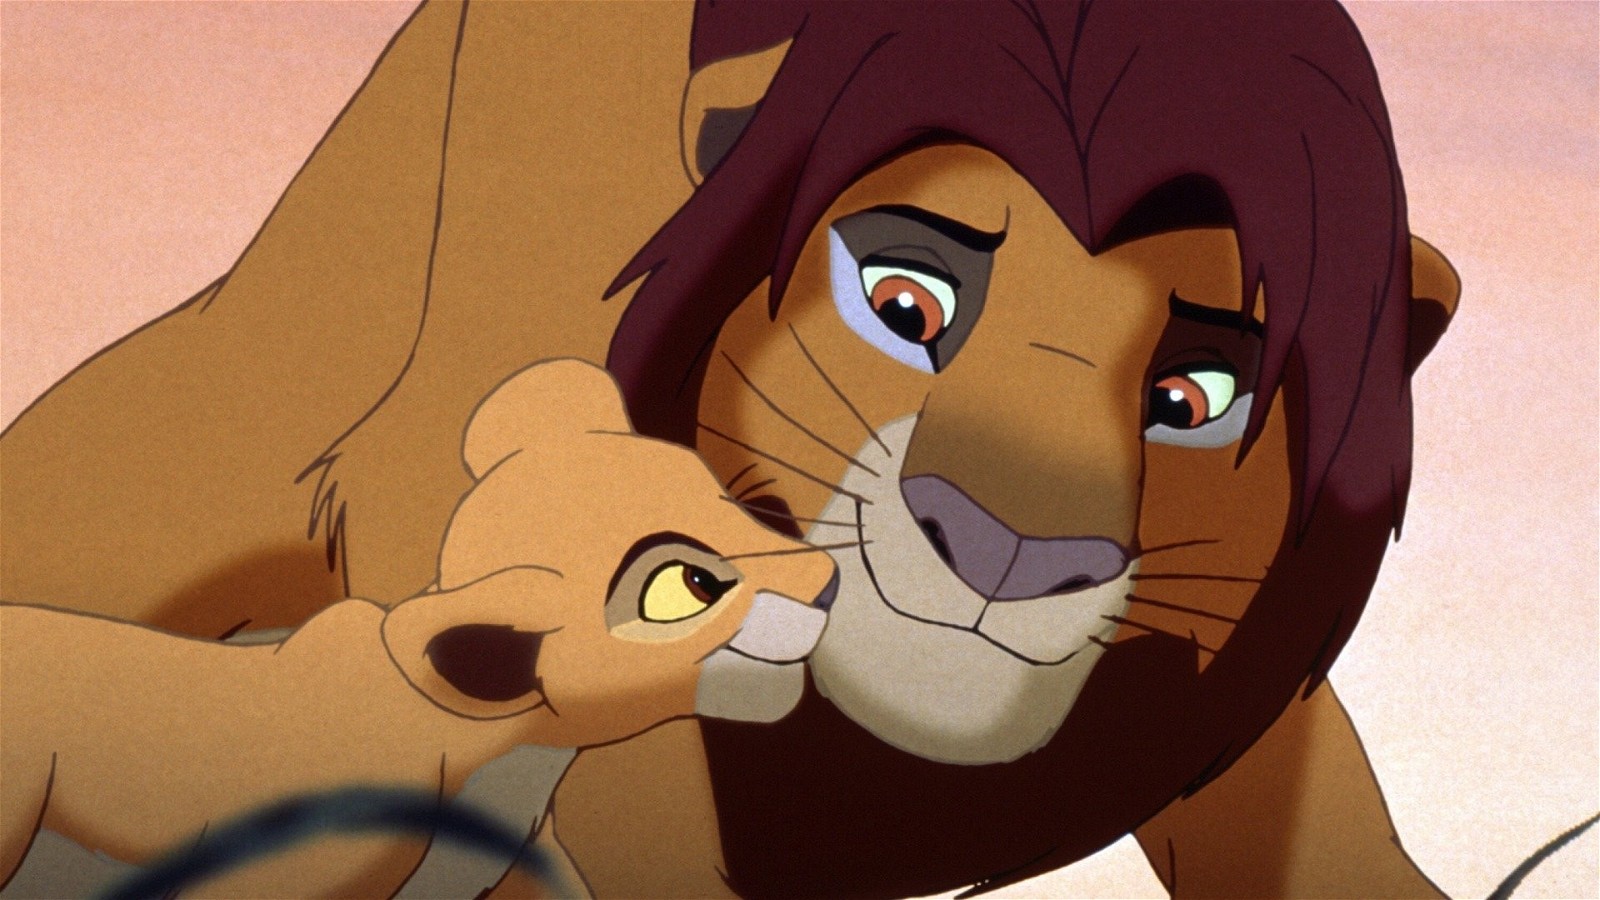 Lion King 2: Simba's Pride